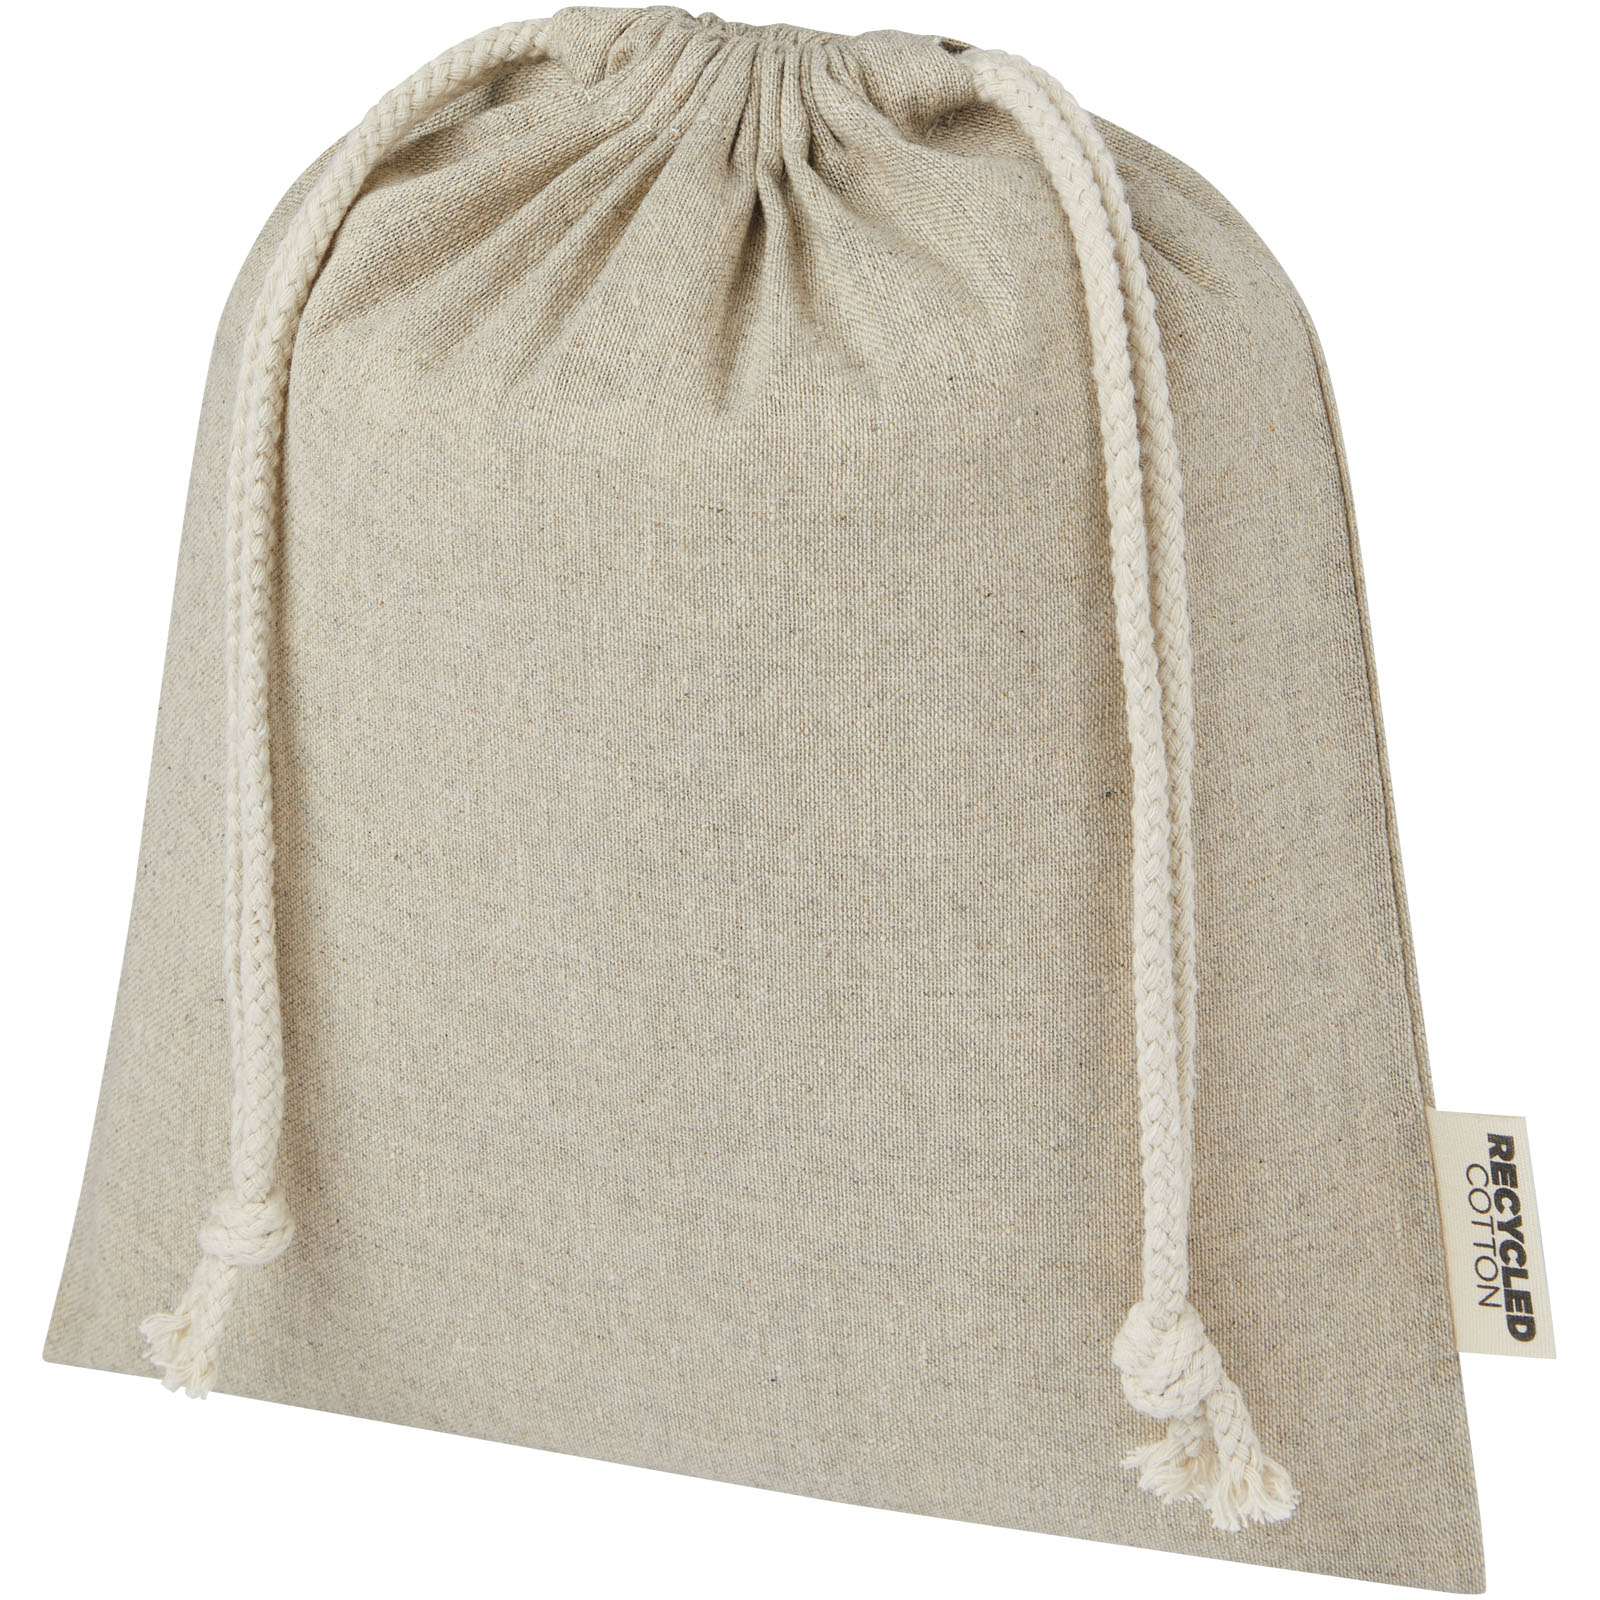 Bags - Pheebs 150 g/m² GRS recycled cotton gift bag medium 1.5L